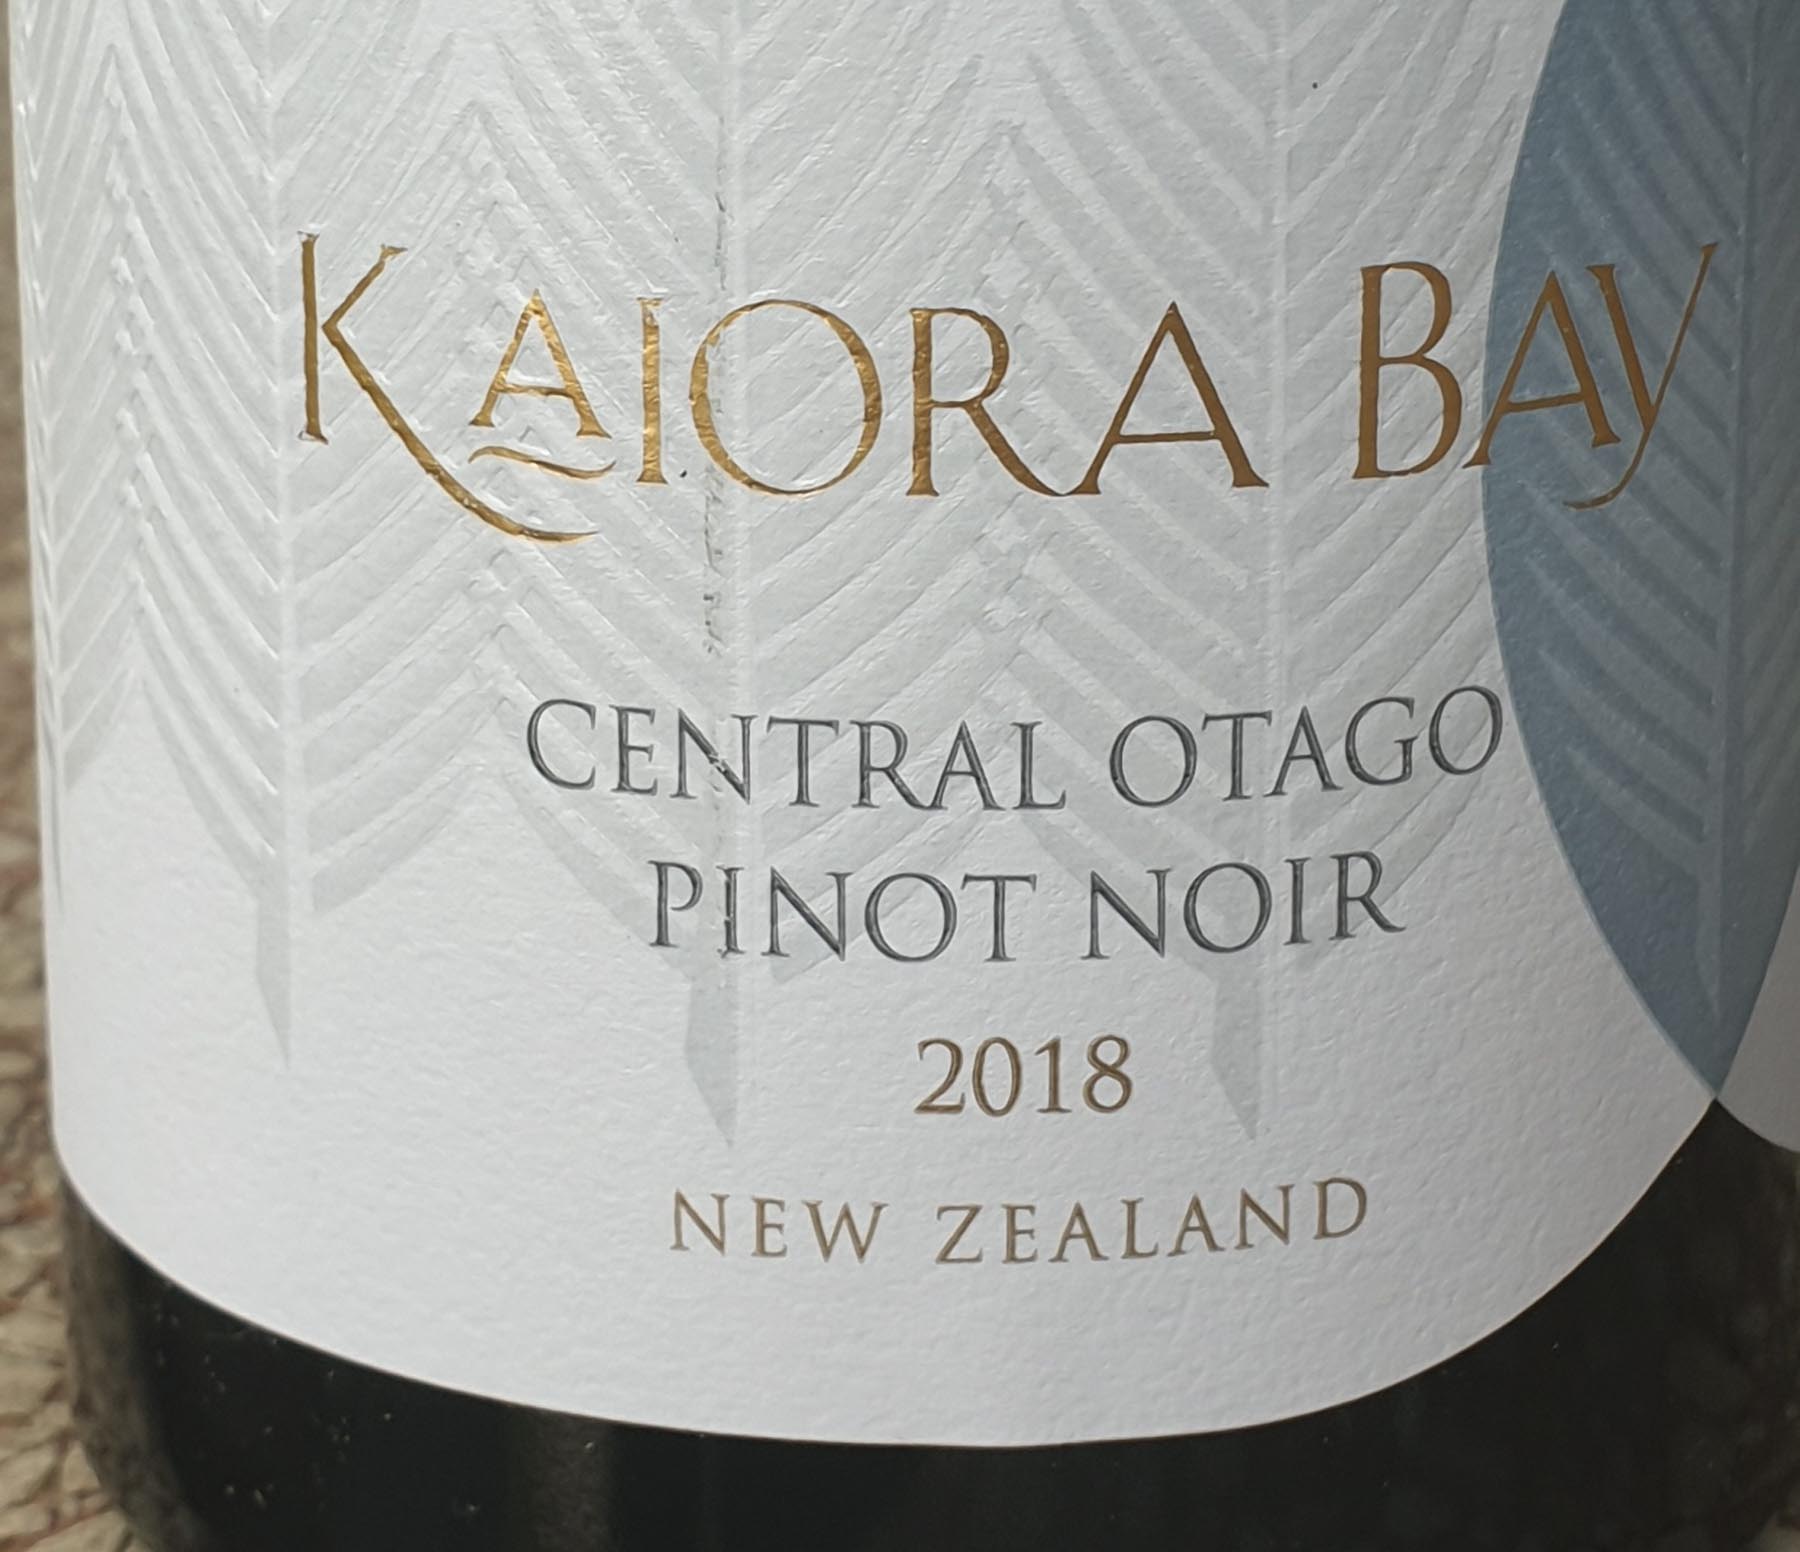 Otago Central Reserve – 2018 Pinot Noir Bay Kaiora